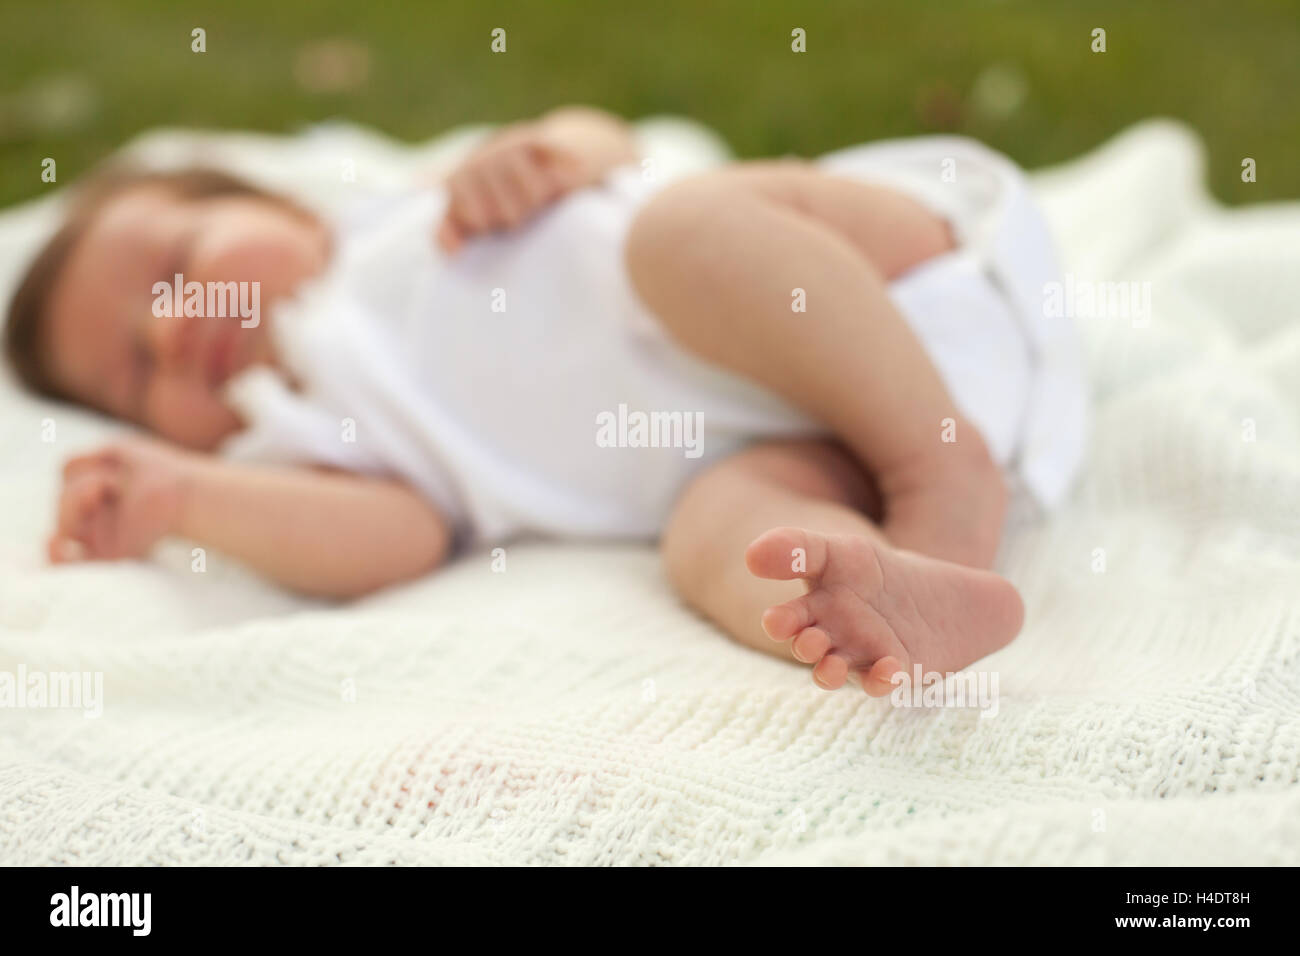 Baby sleeping on the grass Stock Photo